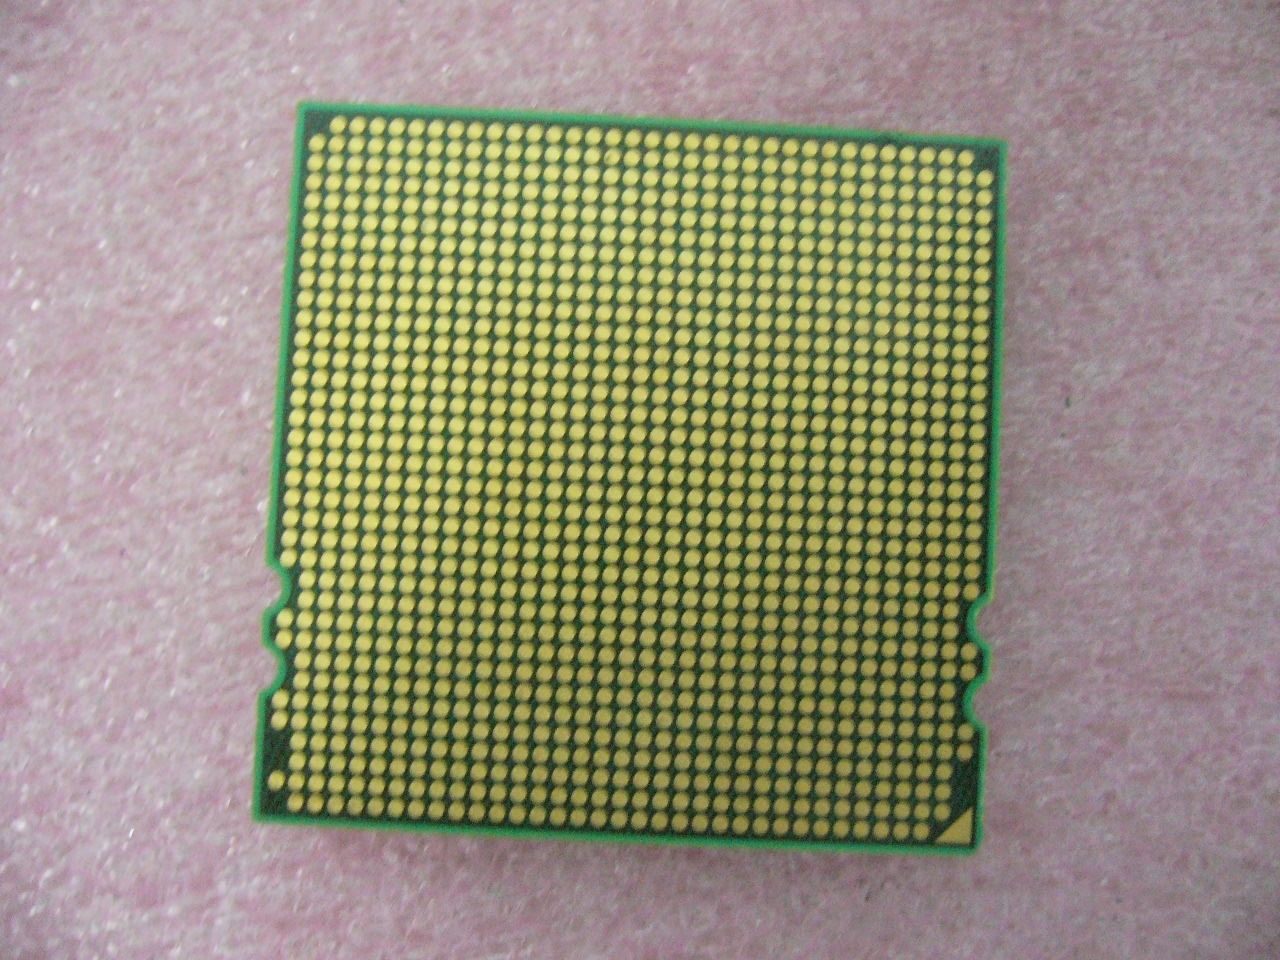 QTY 1x AMD Opteron 2346 HE 1.8 GHz Quad-Core (OS2346PAL4BGC) CPU Socket F 1207 - Click Image to Close